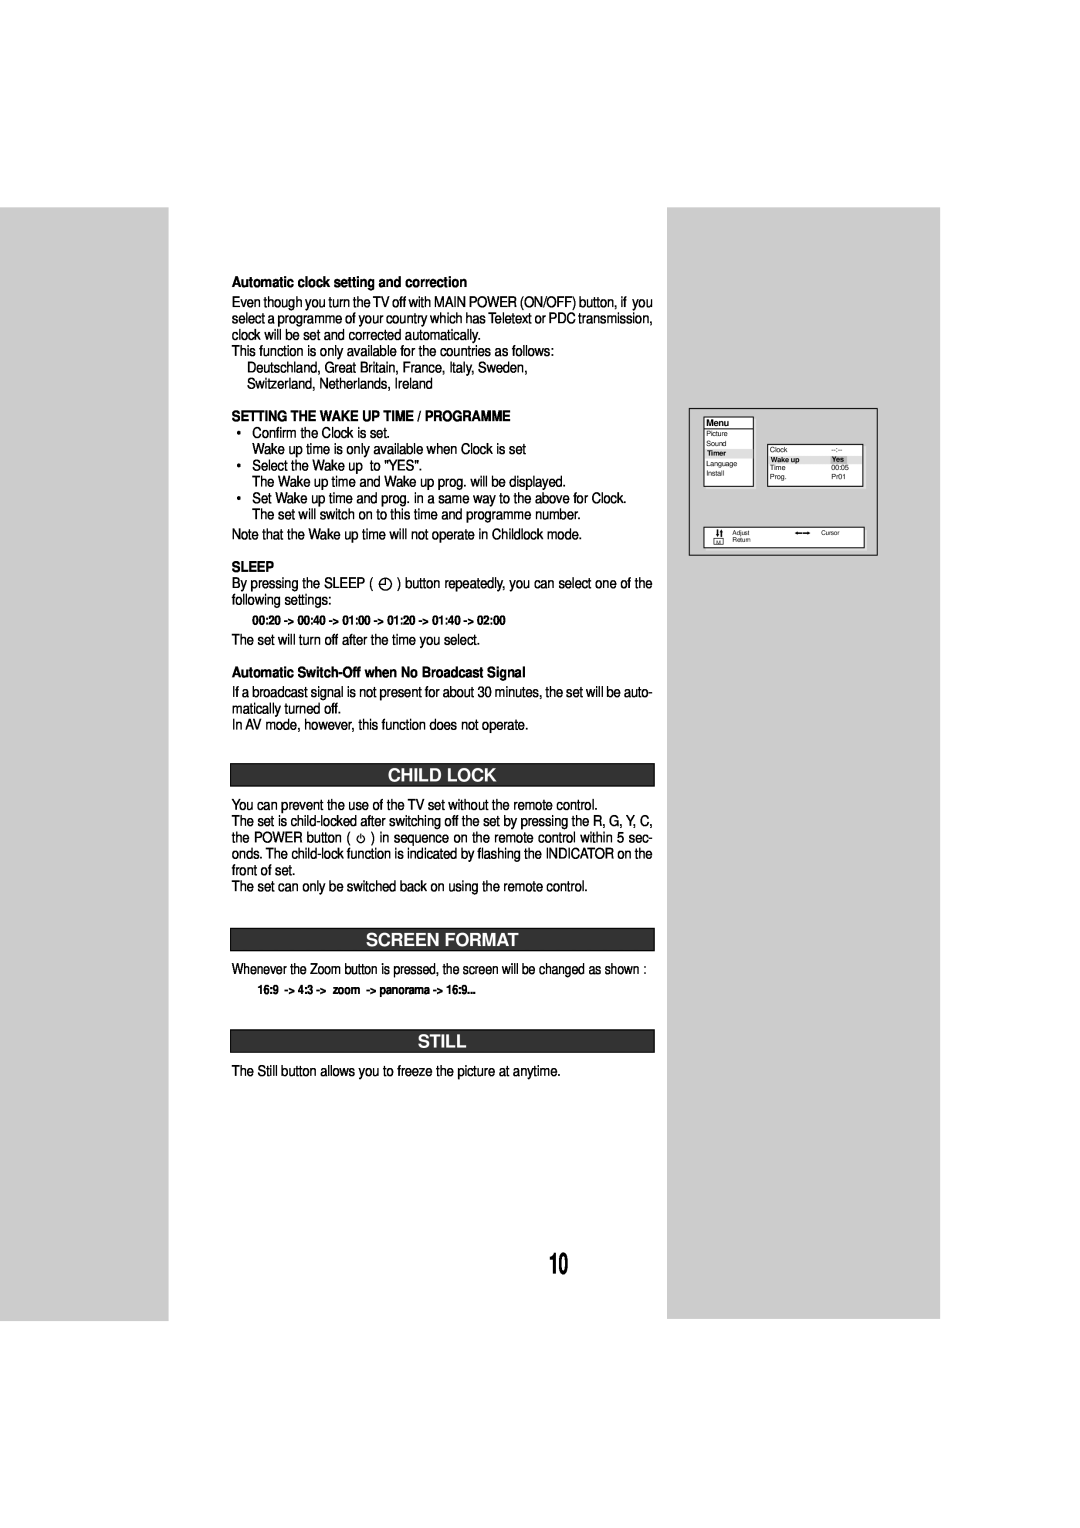 Daewoo DSC-3270E instruction manual Child Lock, Screen Format, Still, Automatic clock setting and correction, Sleep 